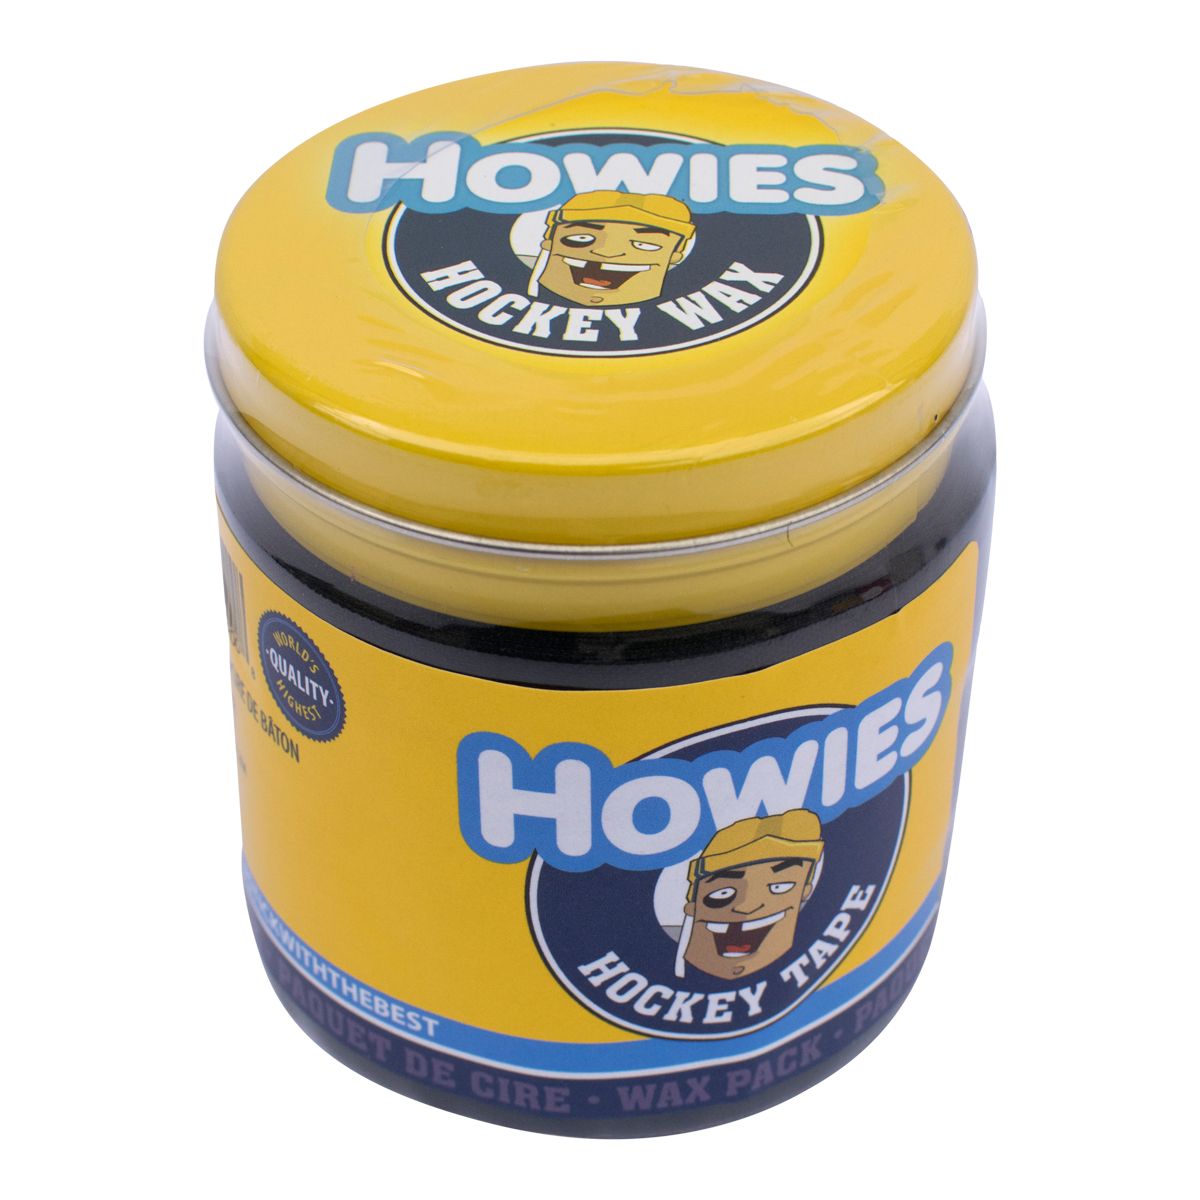 Image of Howies Hockey Tape & Wax Pack